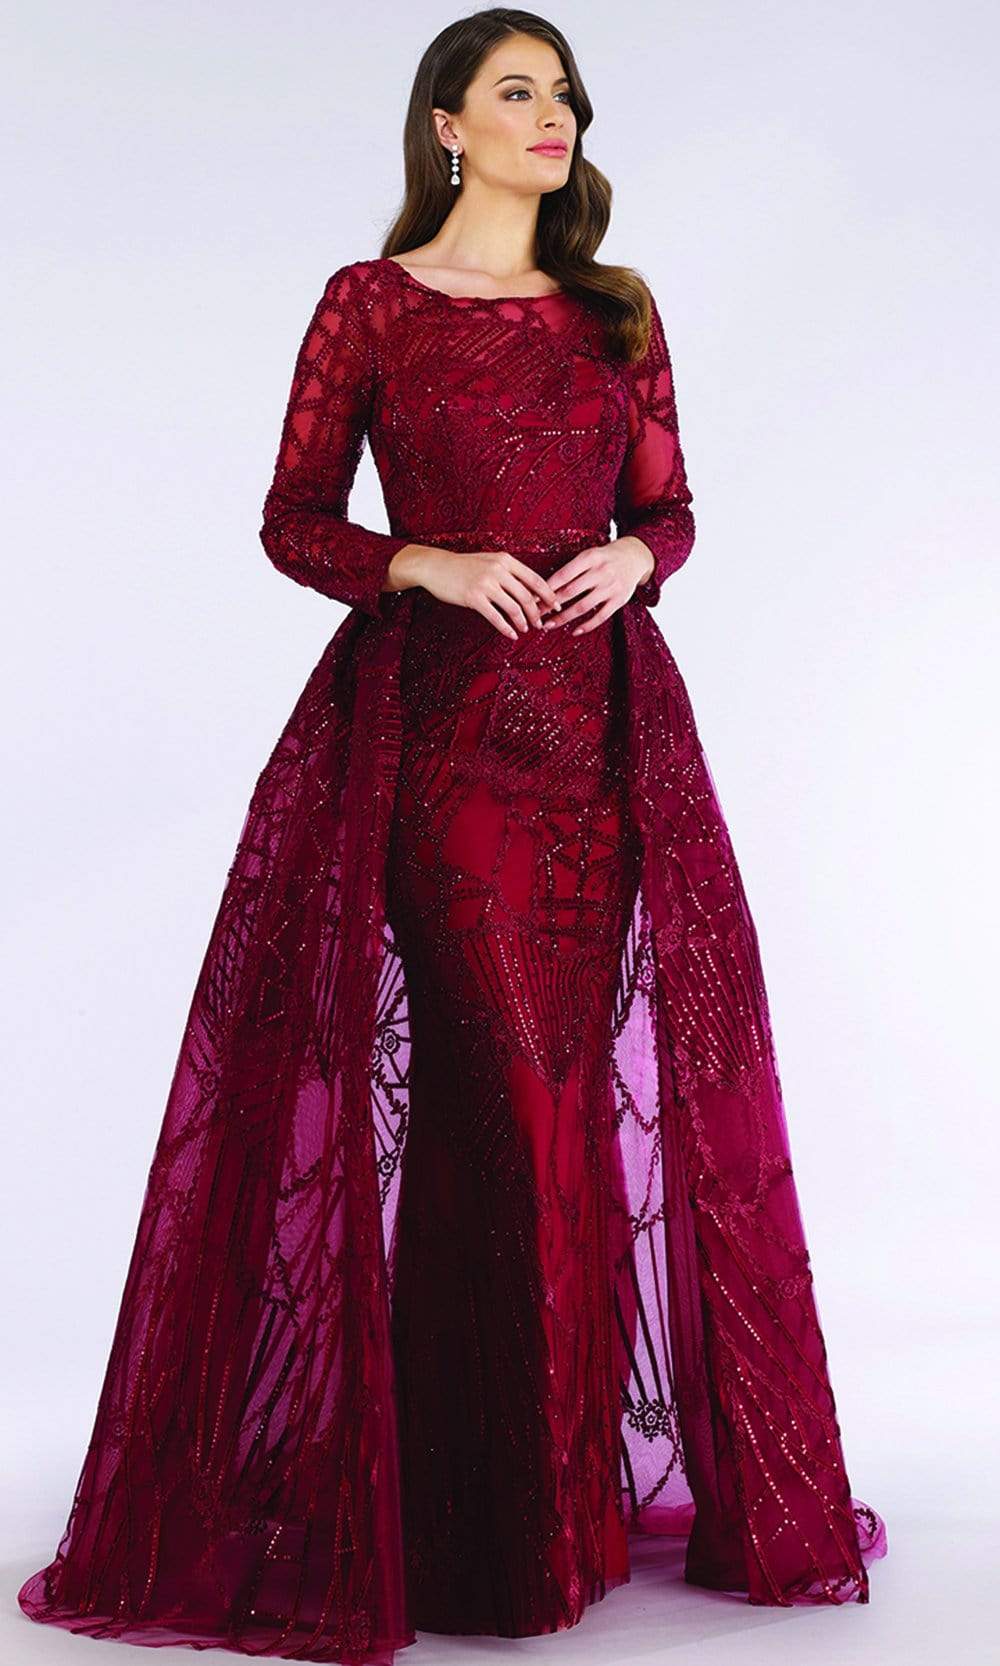 Lara Dresses - 29633 Embellished Bateau Dress With Overskirt
